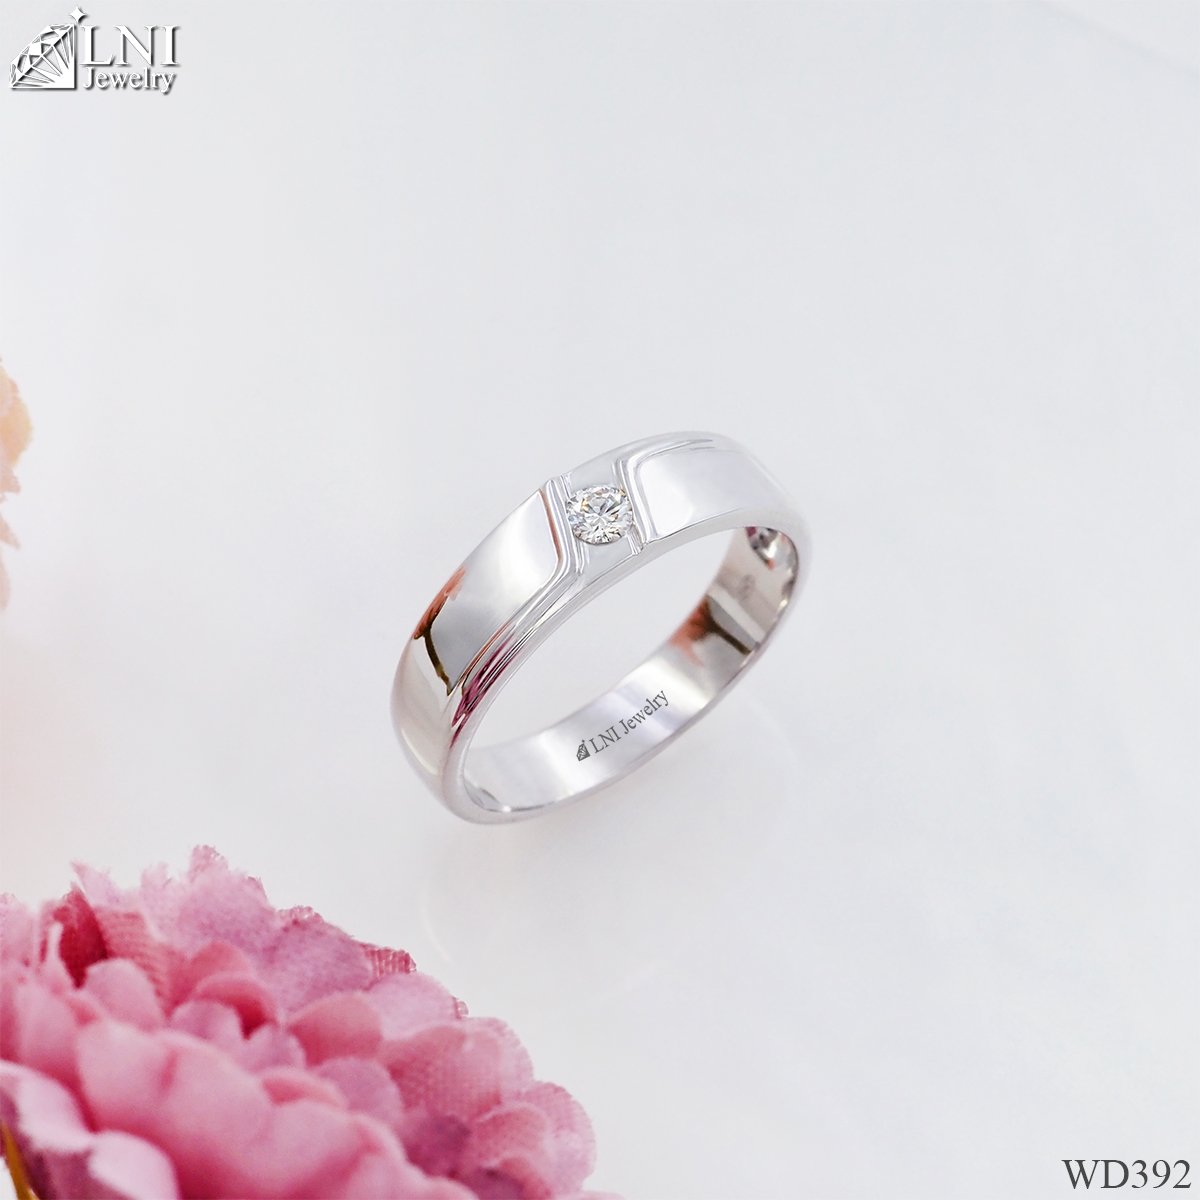 WD392 Single Diamond Ring